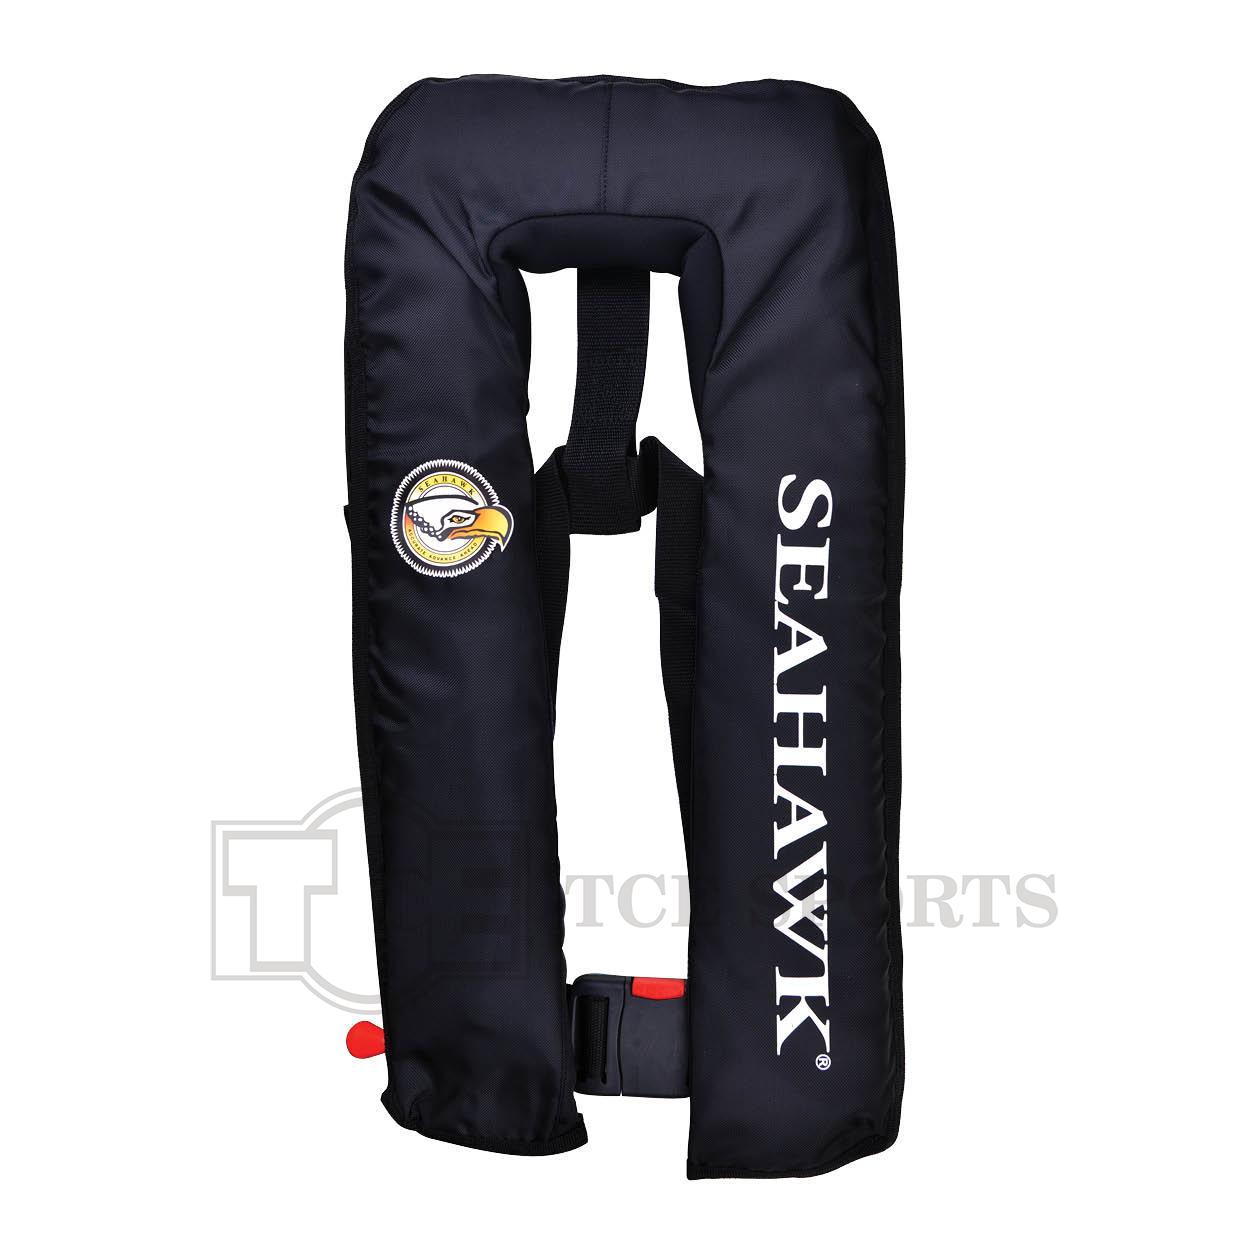 Seahawk - Life Jacket - DHI-017 04